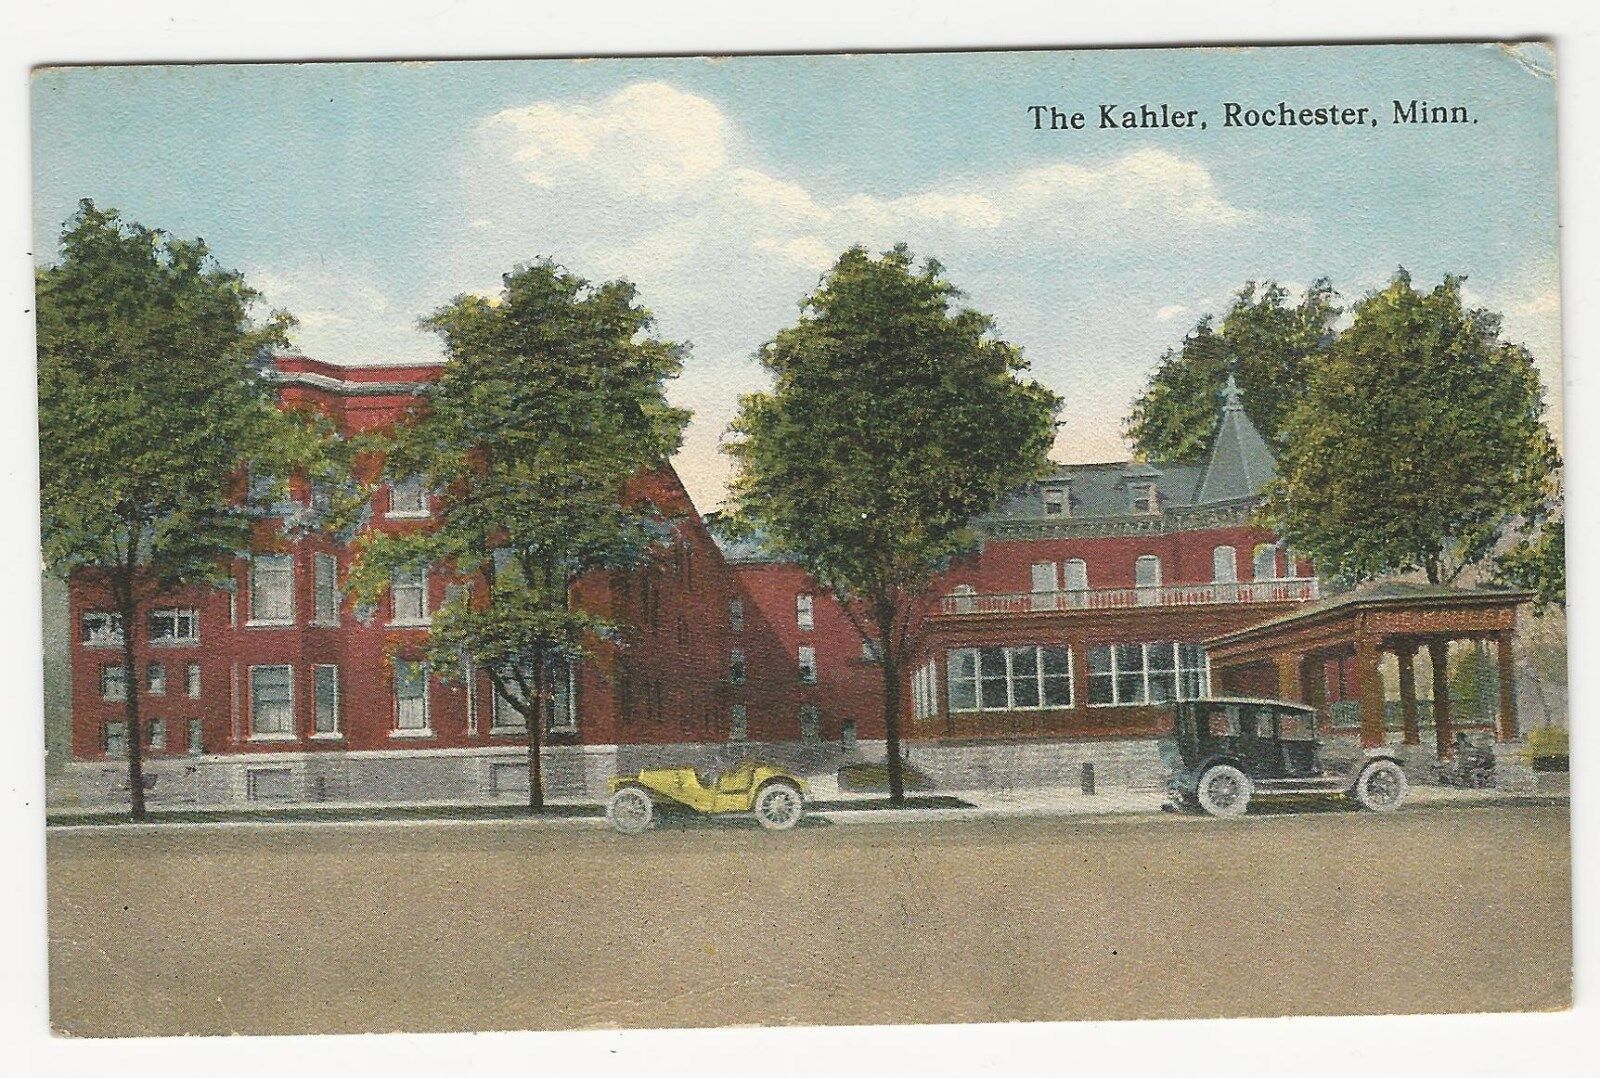 PC Street & autos view, earliest bldg, The Kahler Hotel, Rochester, MN, ca1910s